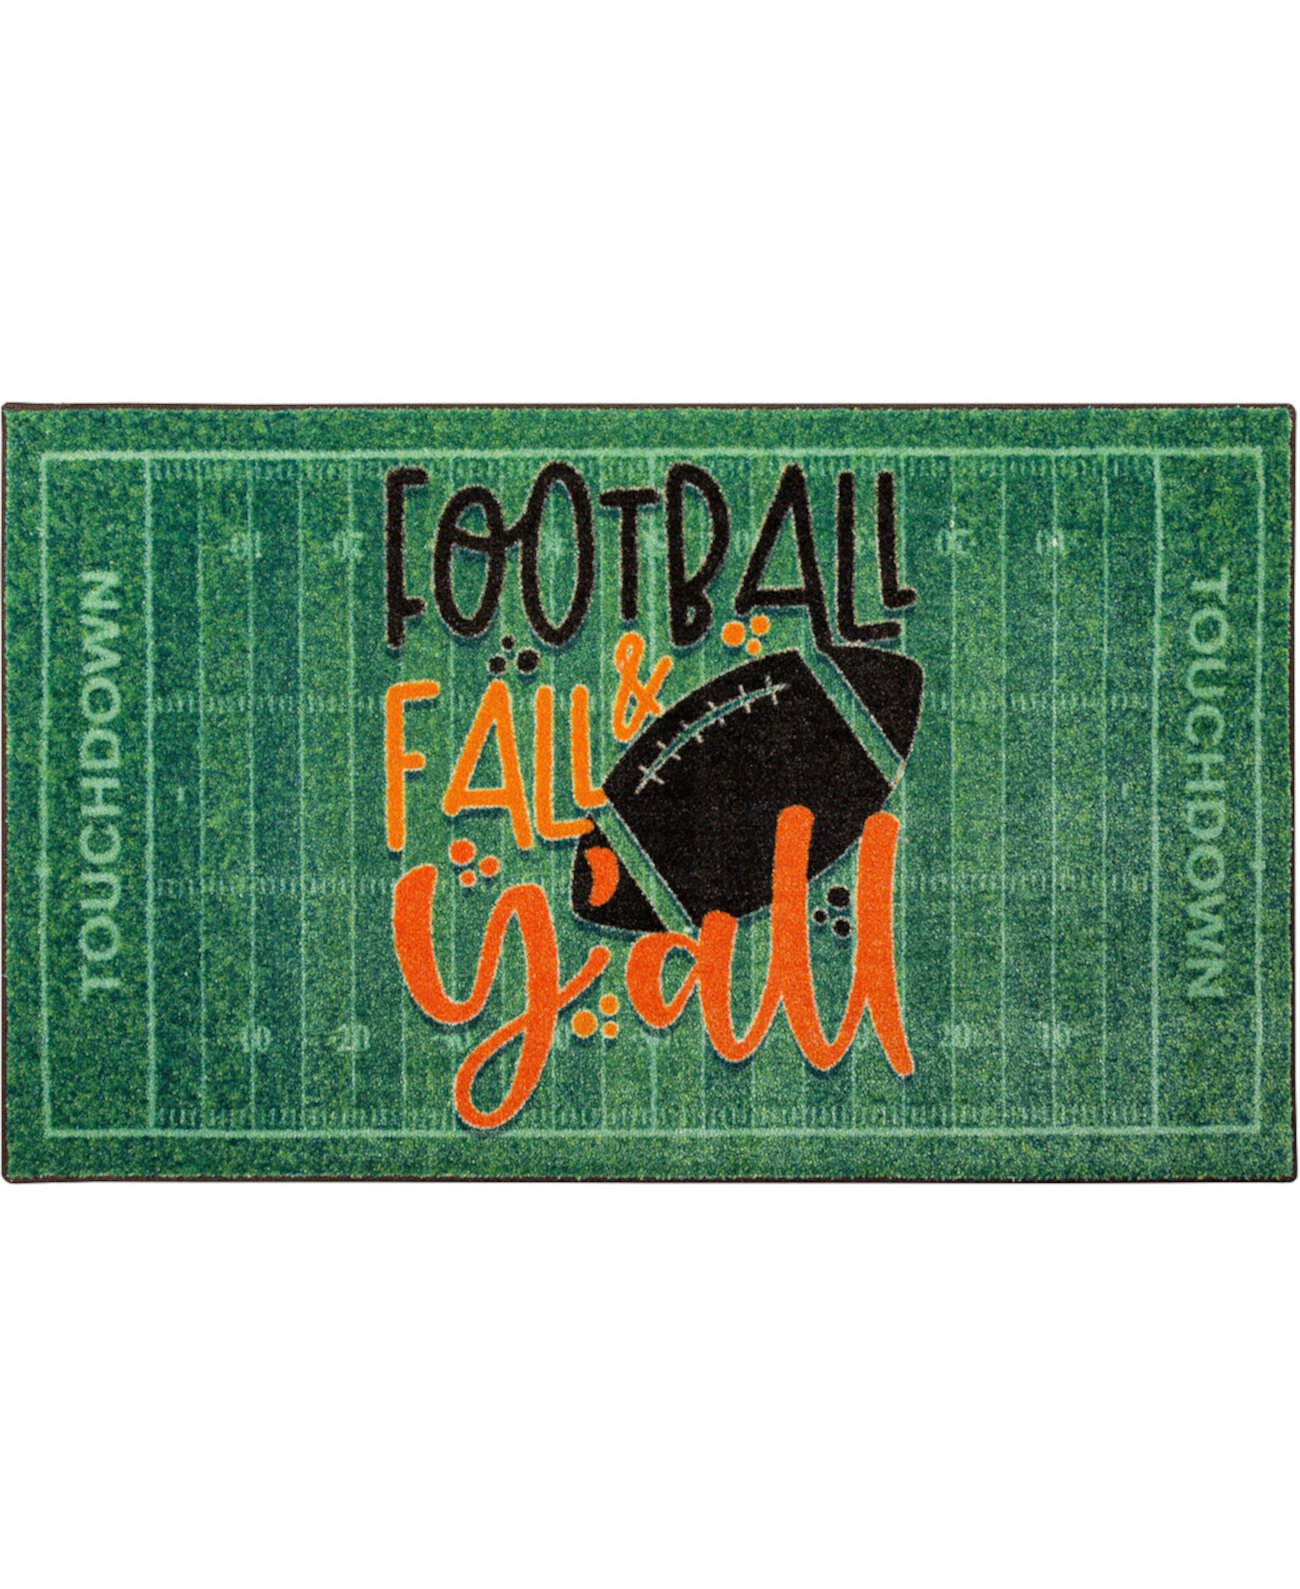 Призматический футбольный коврик Fall Yall размером 2 фута 6 x 4 фута 2 дюйма Mohawk